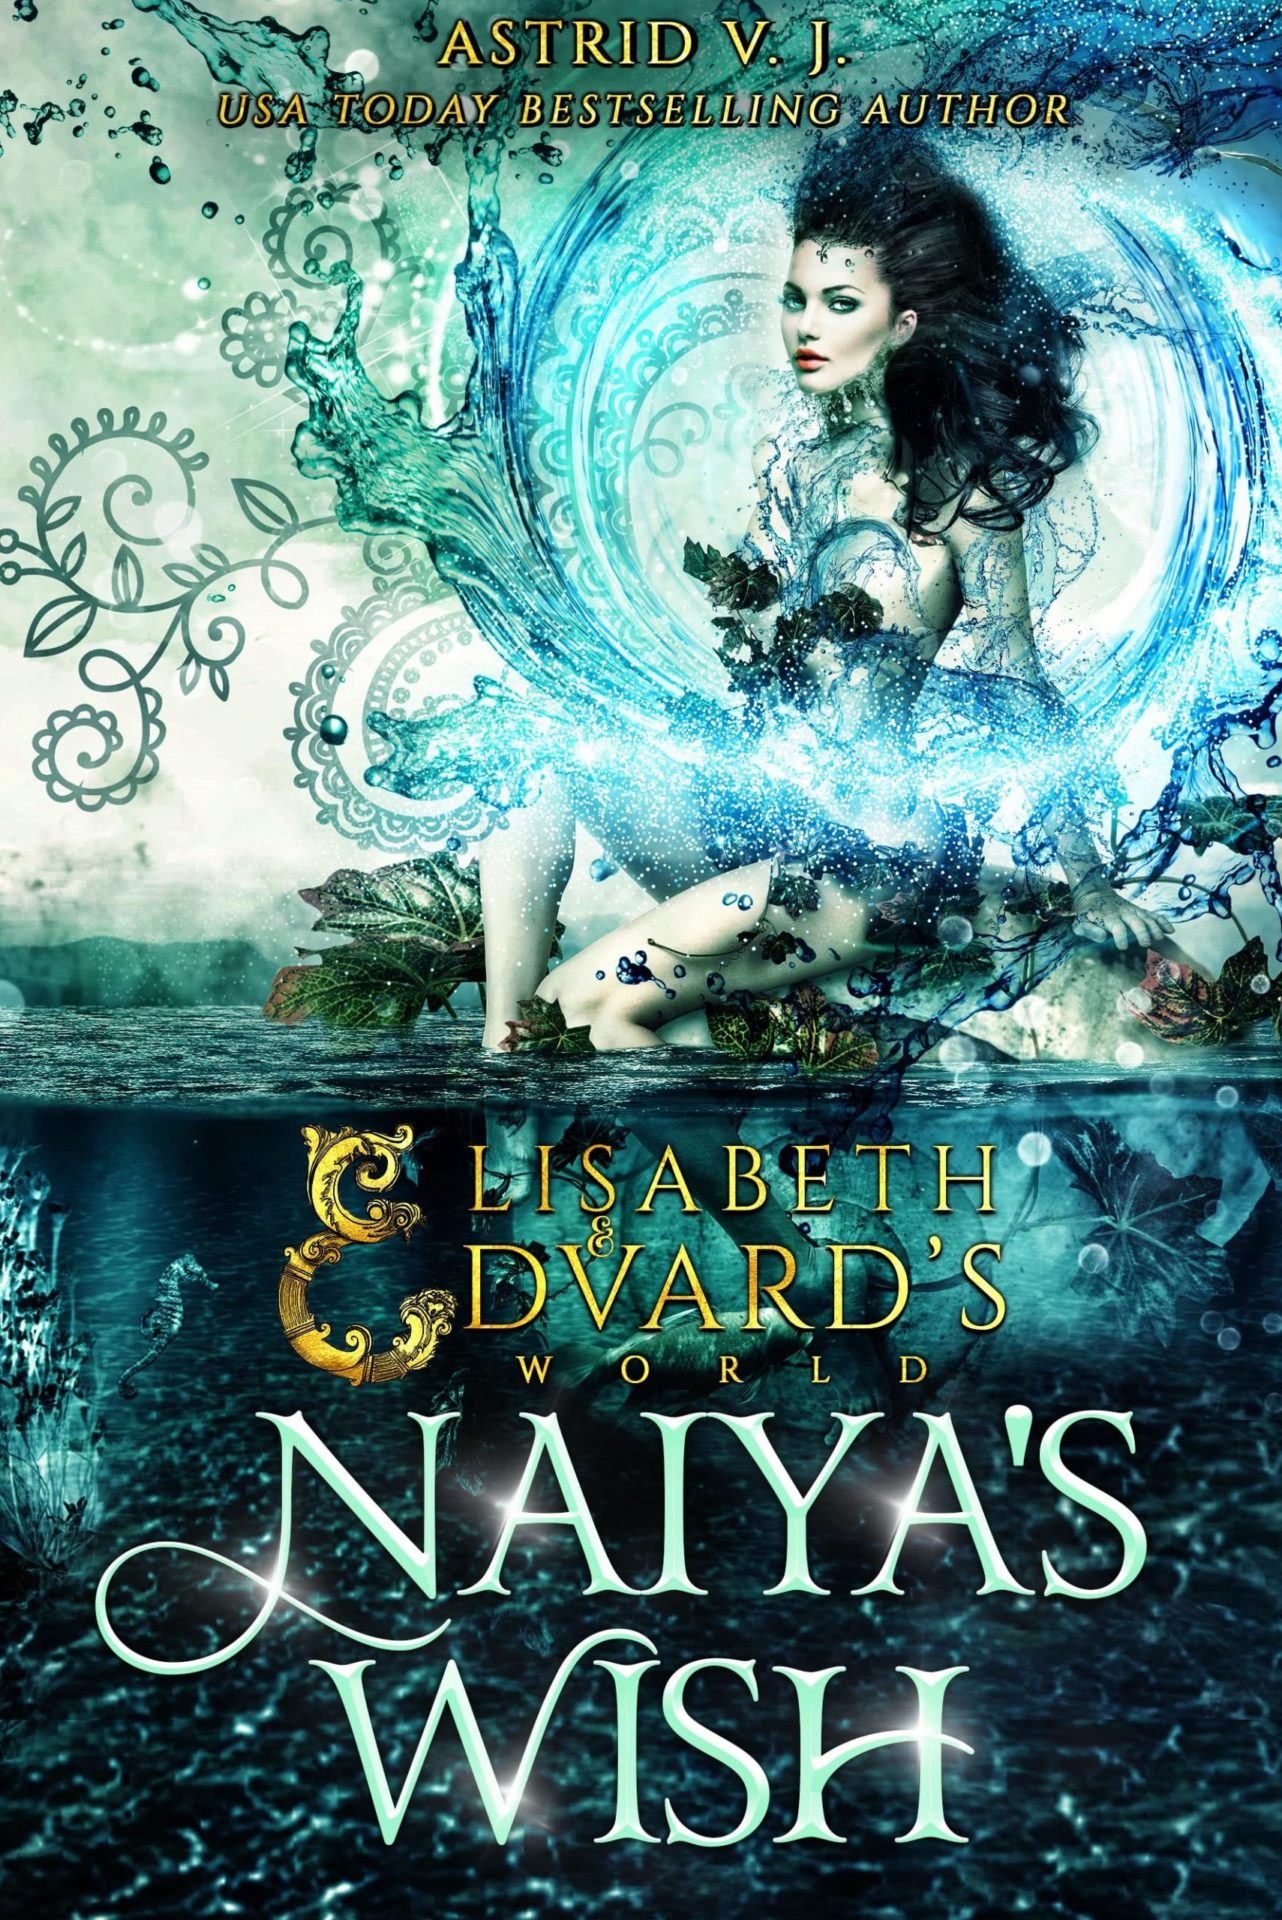 You are currently viewing Naiya’s Wish (Elisabeth and Edvard’s World #3) – Astrid V. J.